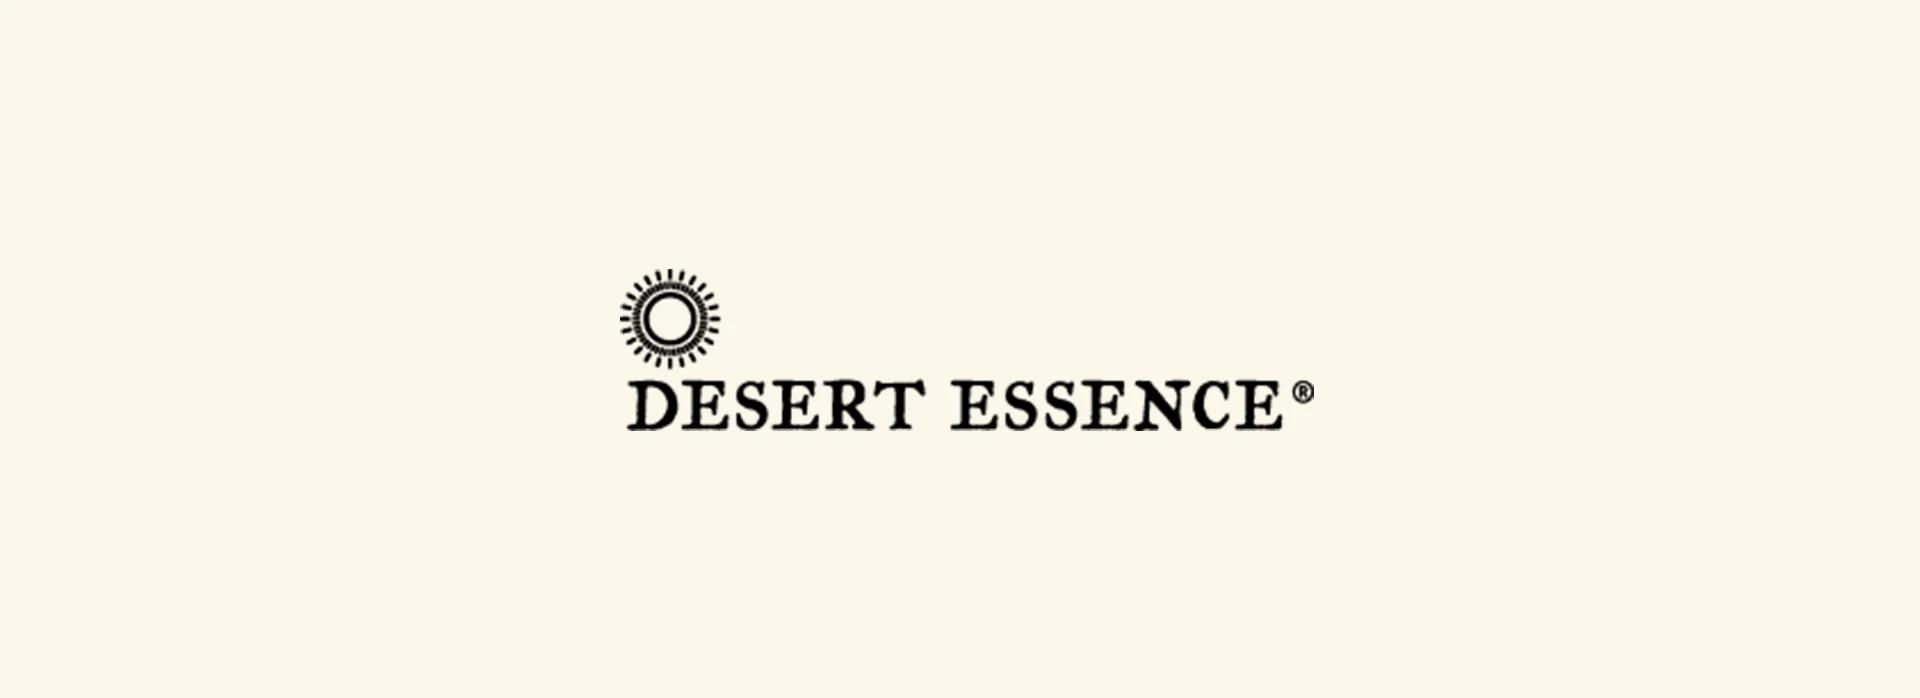 Desert Essence - M'Angers bio, magasin bio Angers: alimentation